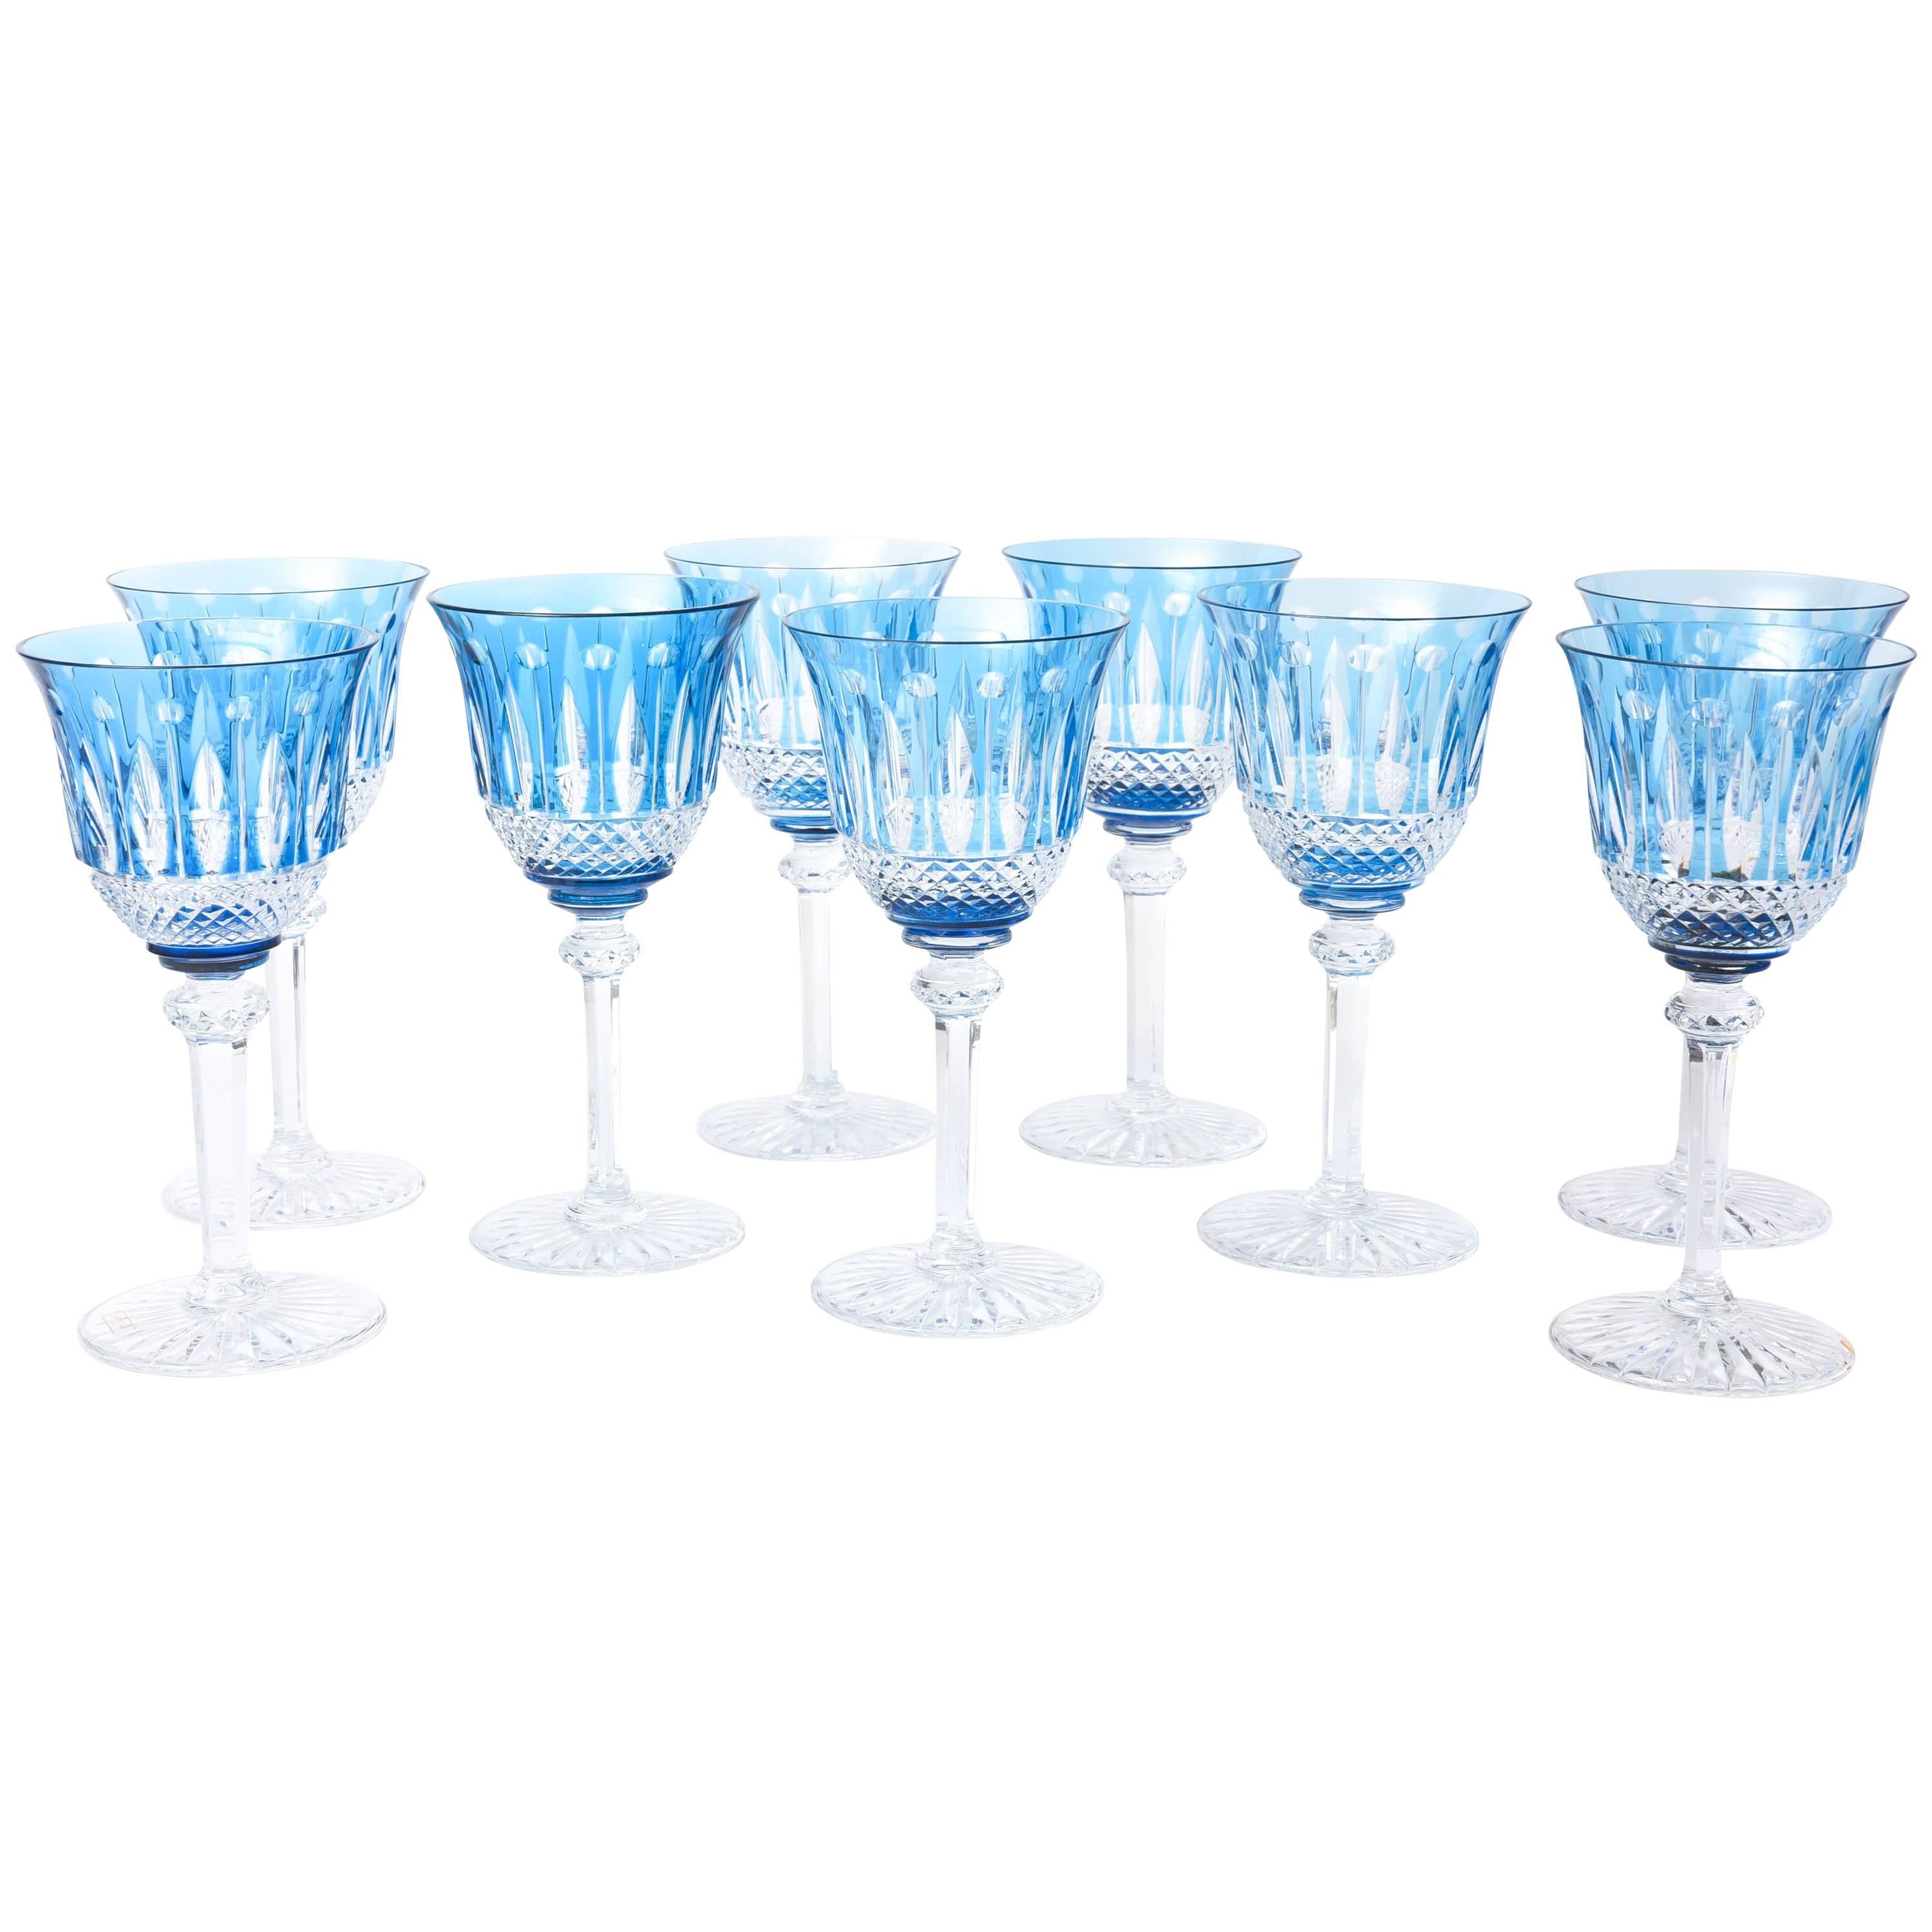 Set of Nine Saint Louis Cut Crystal Goblets, Sky Blue with Original Stickers